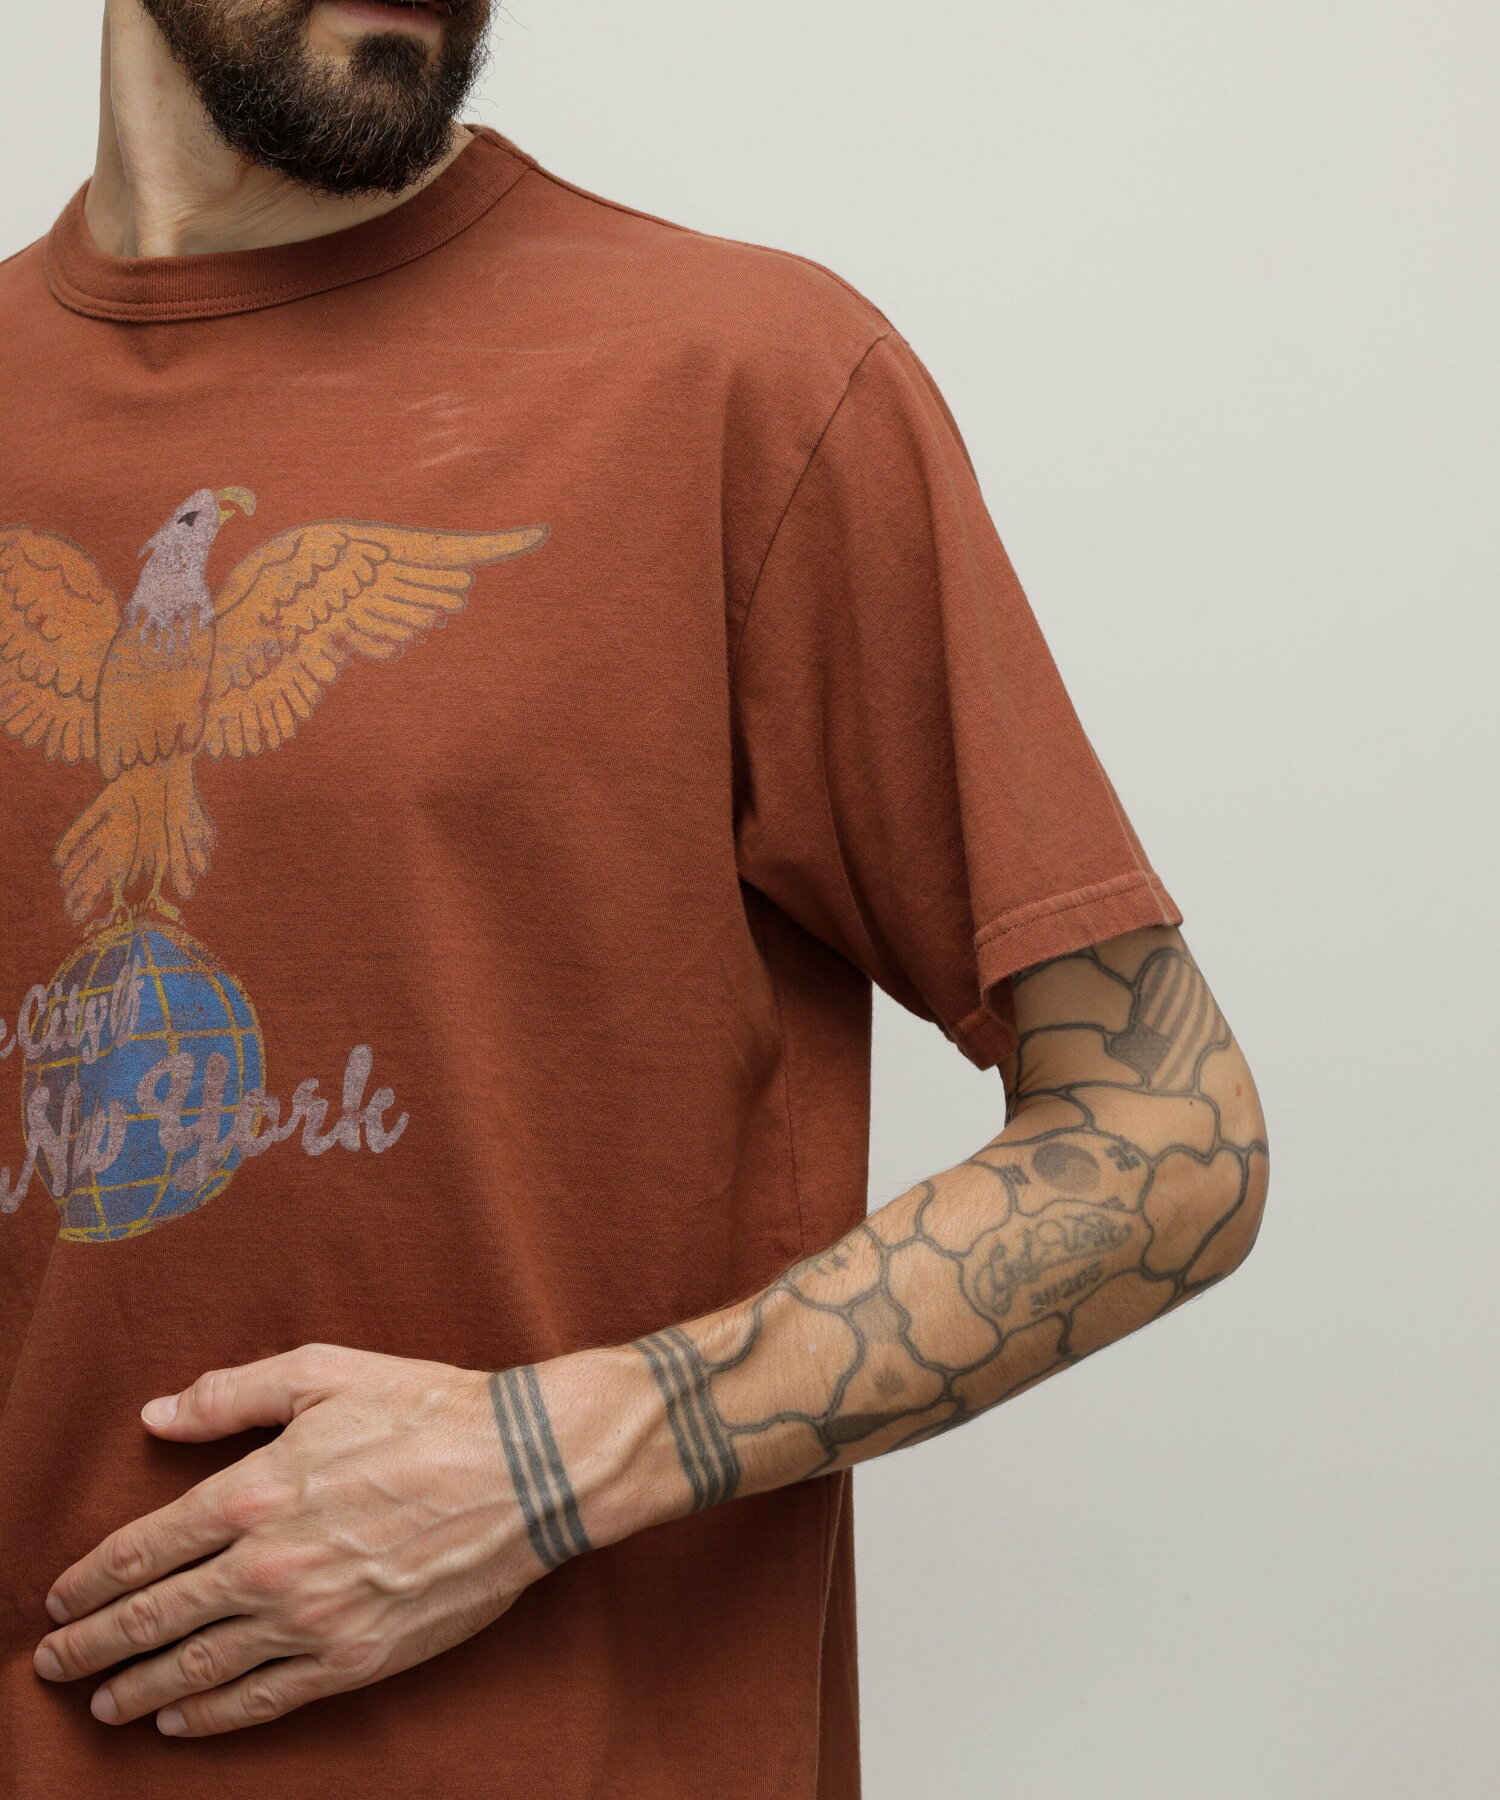 T-SHIRT "EAGLE GLOBE"/Tシャツ "イーグル グローブ